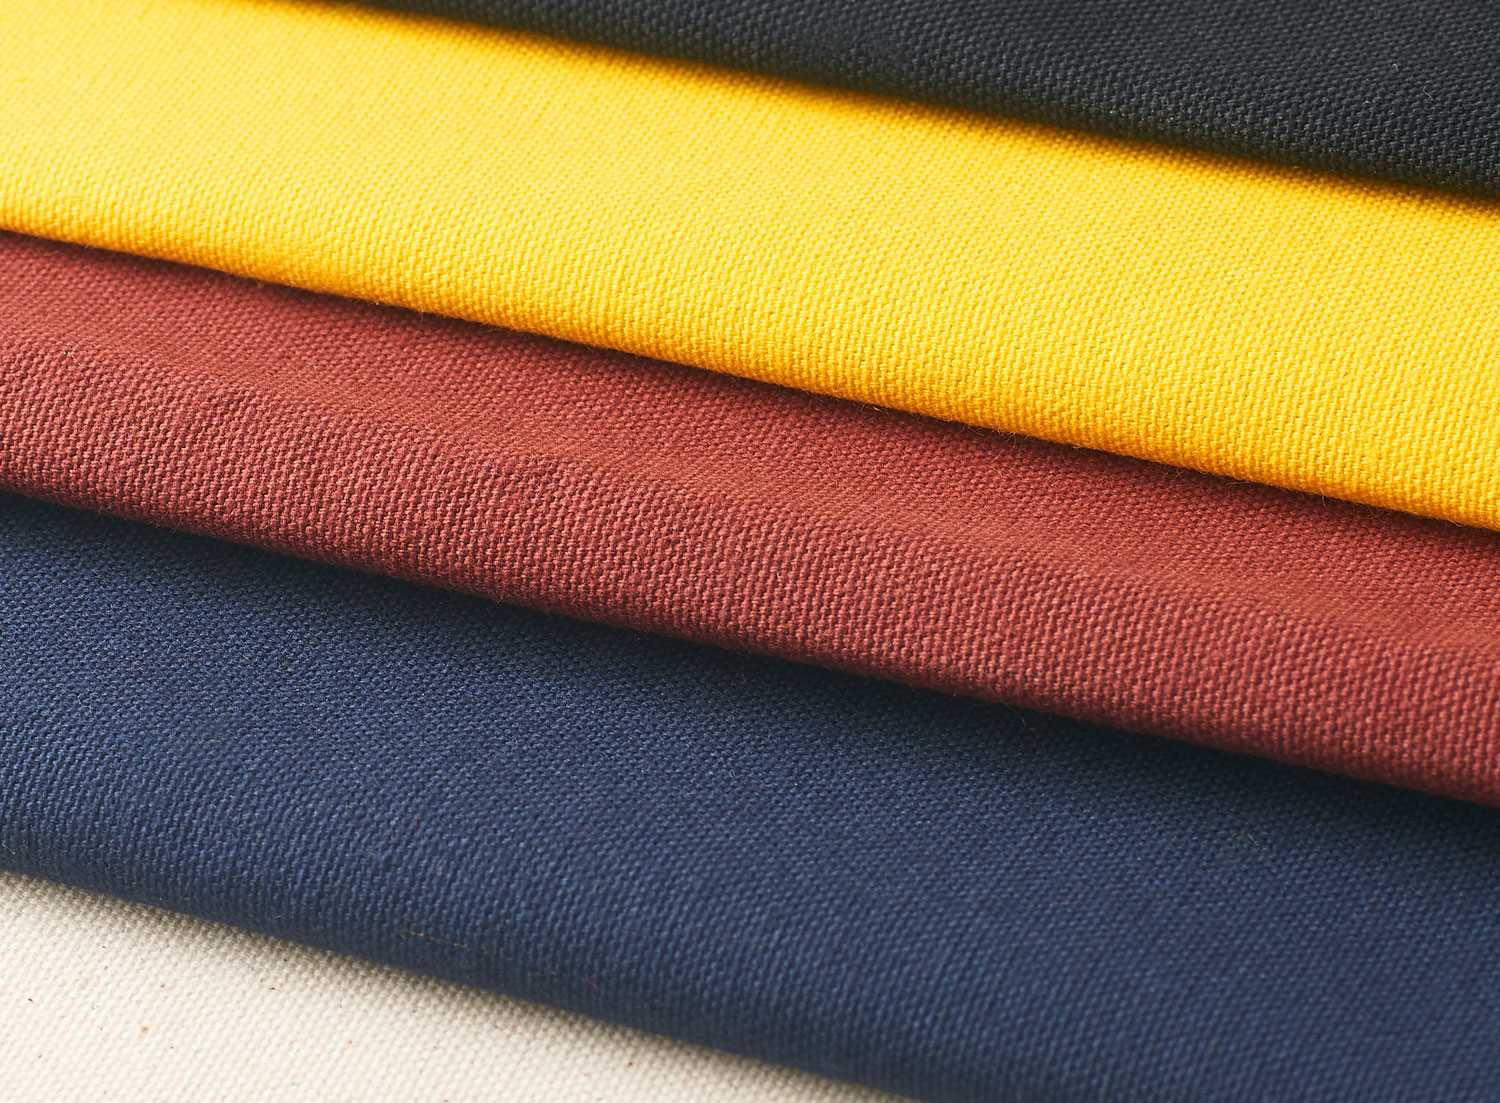 Woven Fabric | Stock & Custom Fabric | Industrial Fabric Supplier